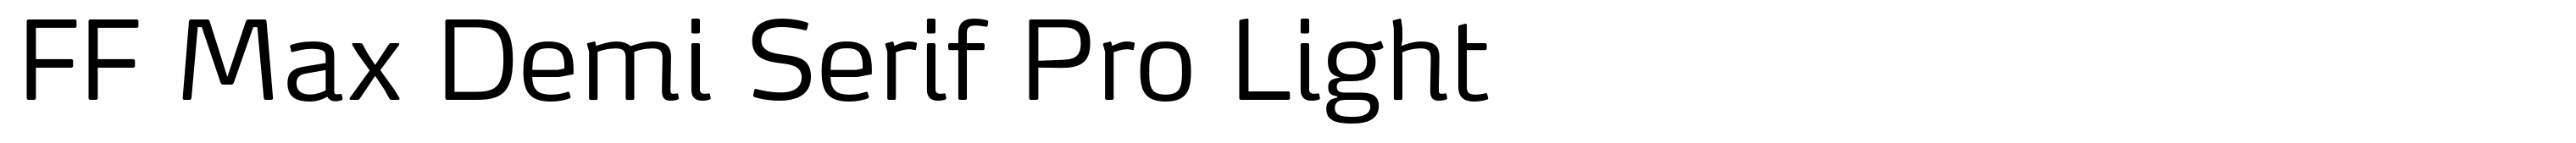 FF Max Demi Serif Pro Light